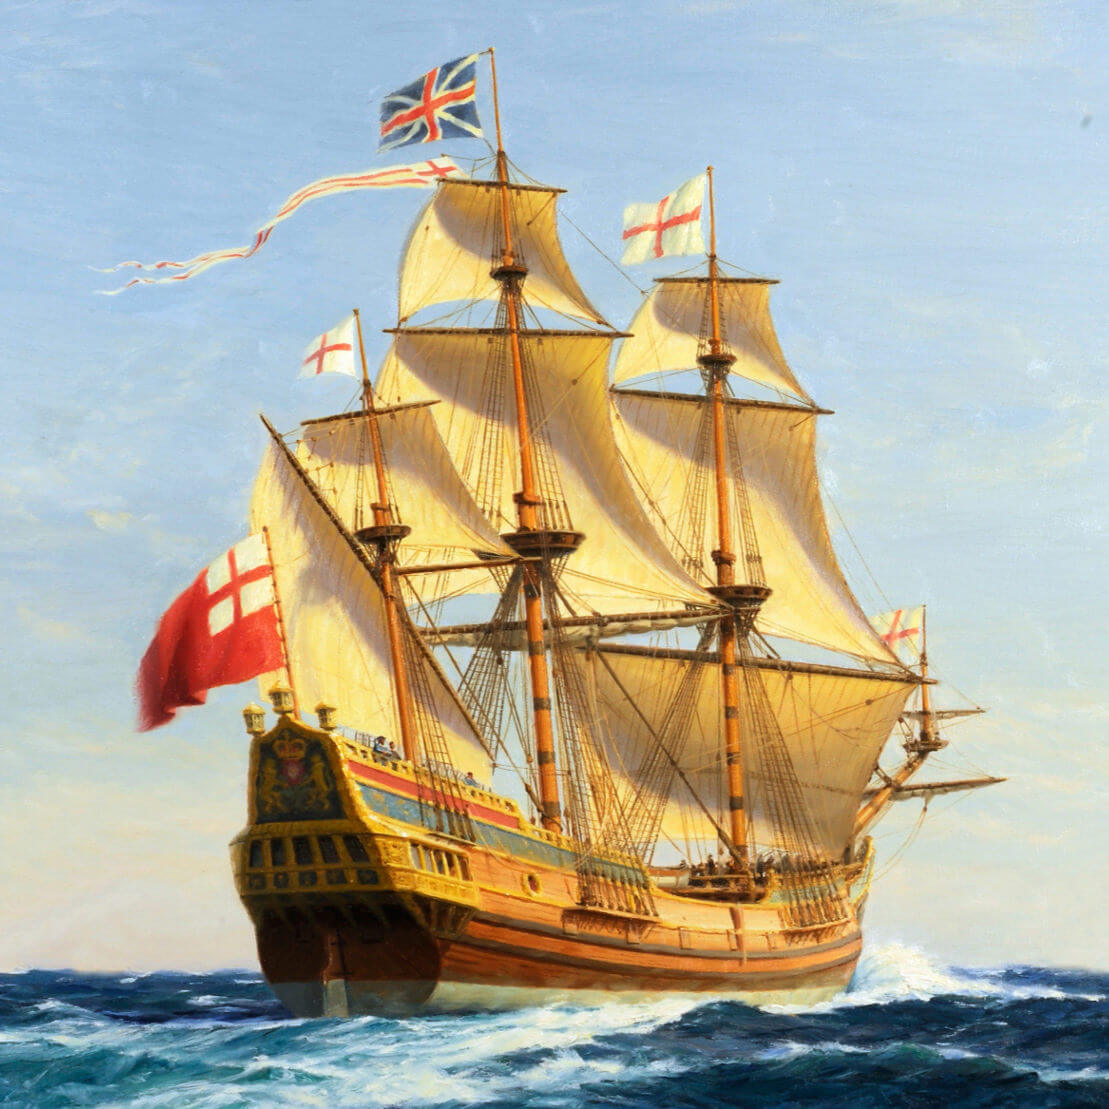 British 17th century ship